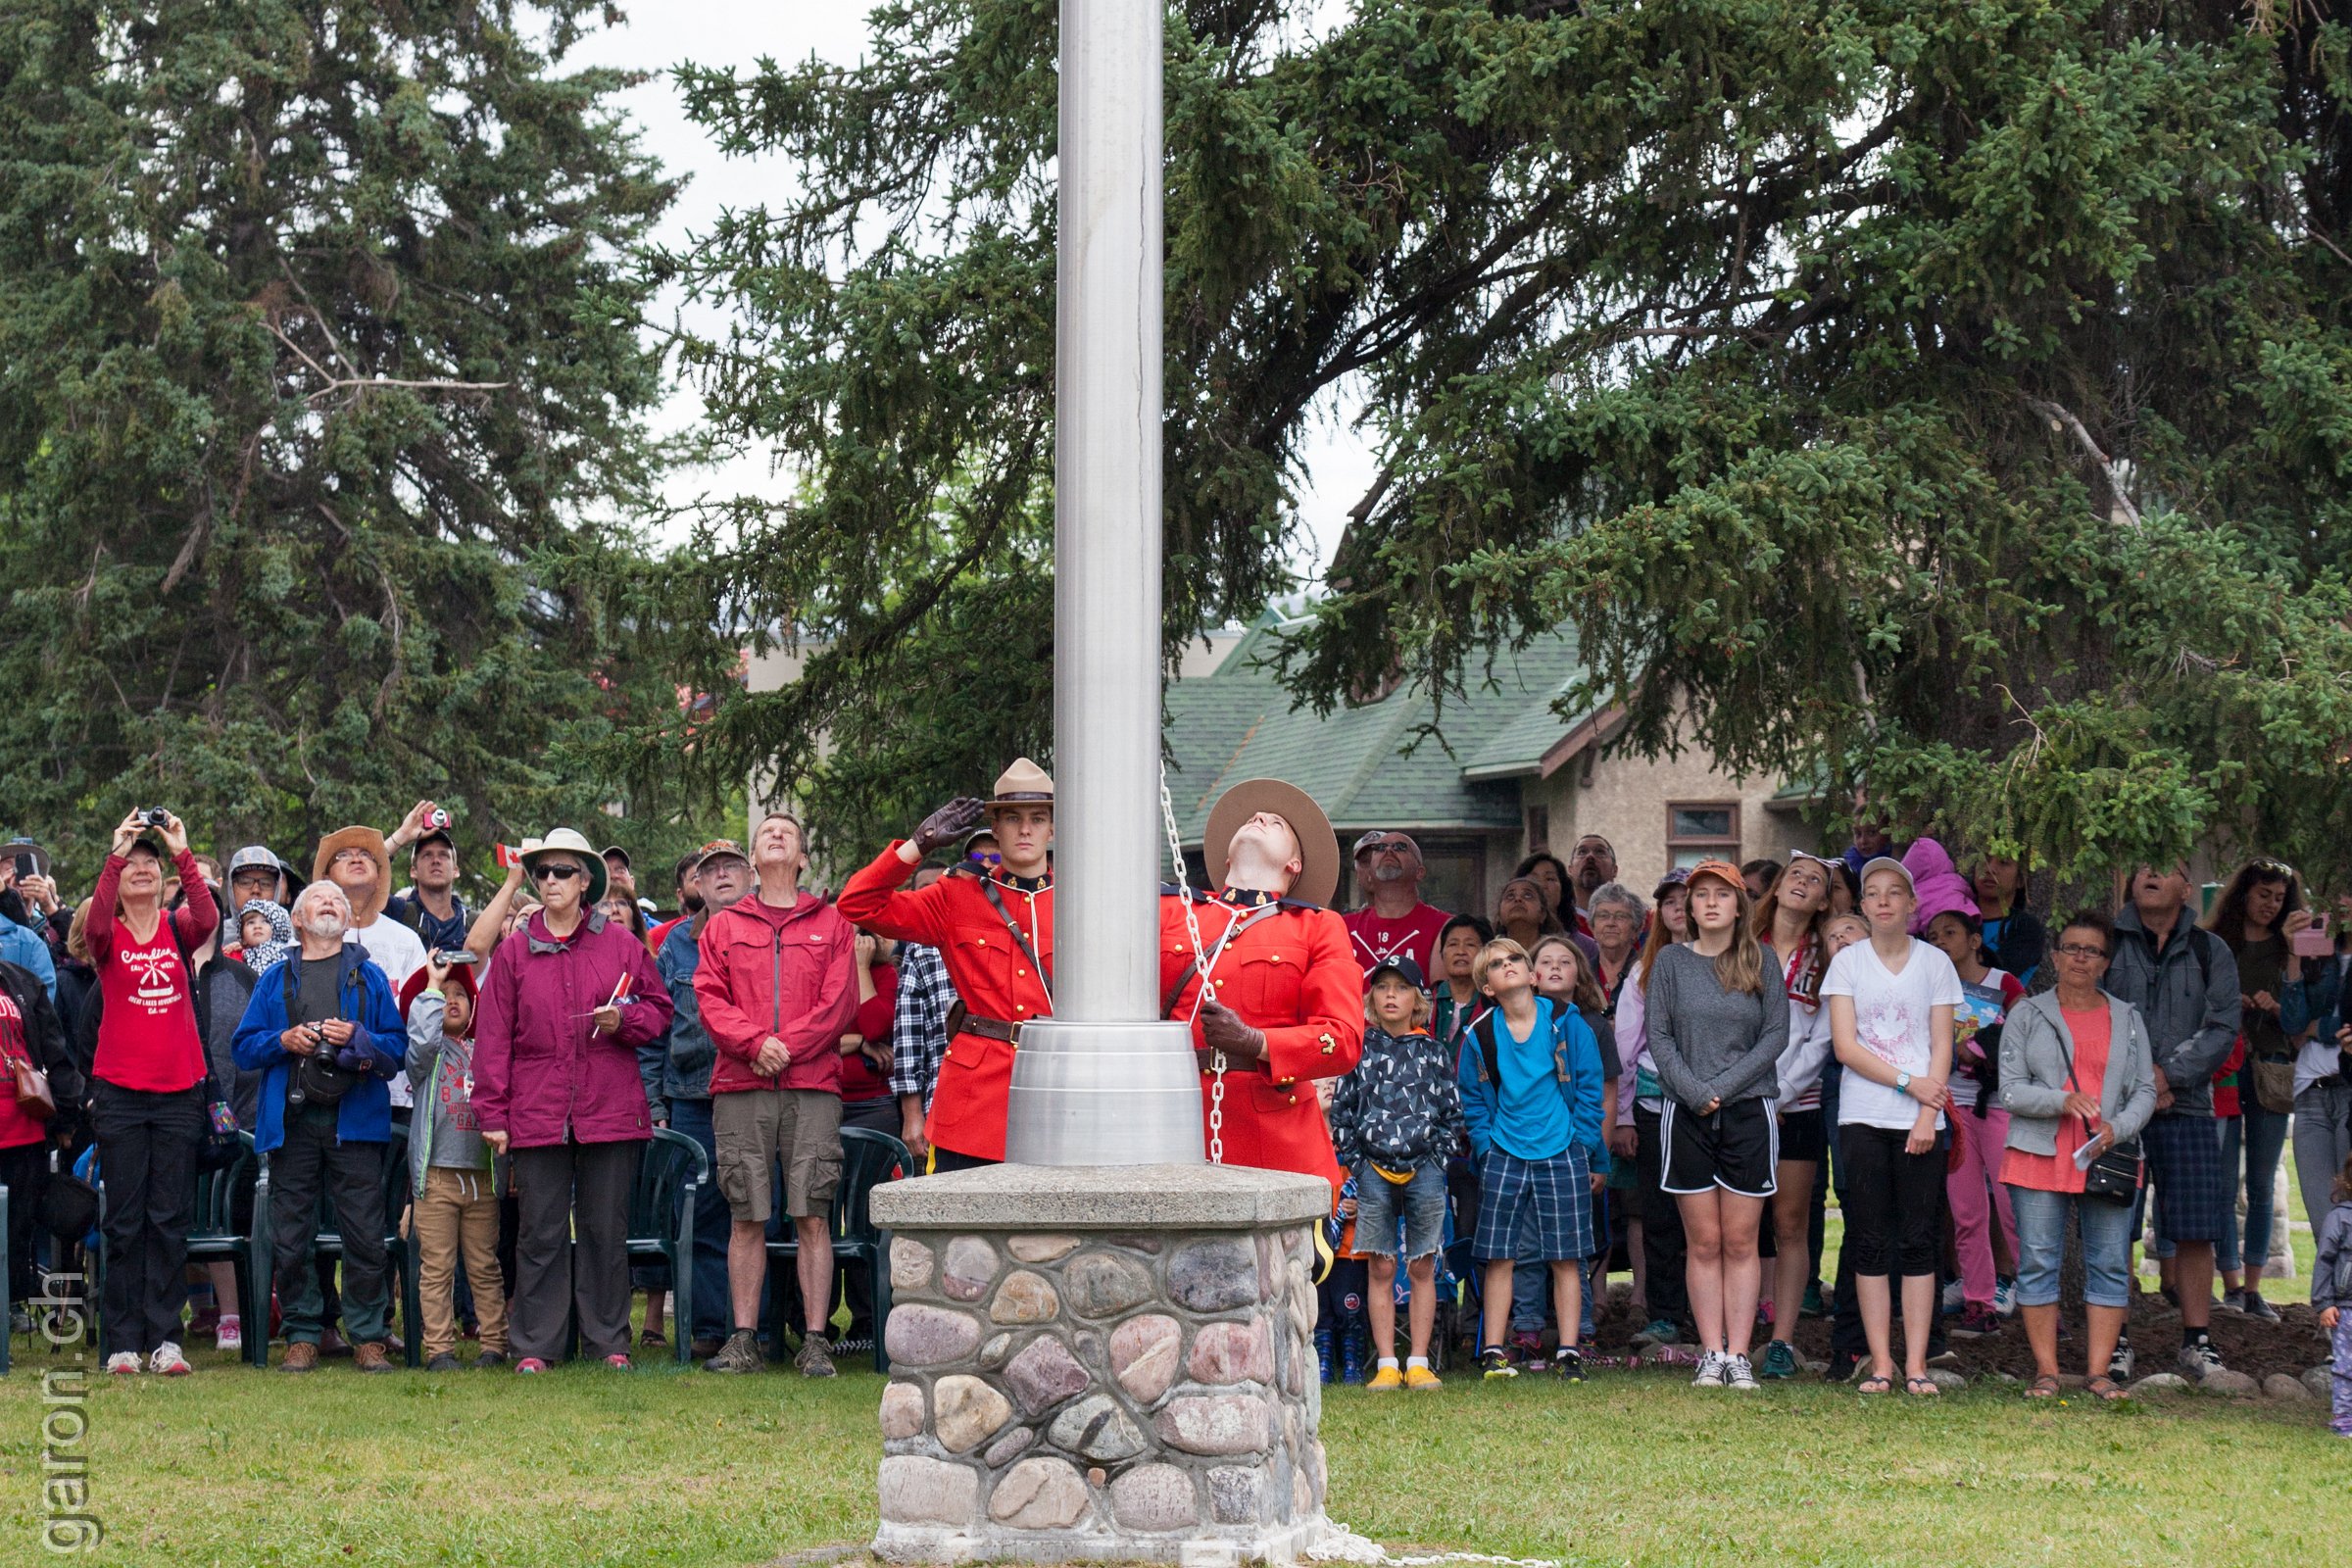 Jasper, Canada Day Flag raising ceremony at Canada Day